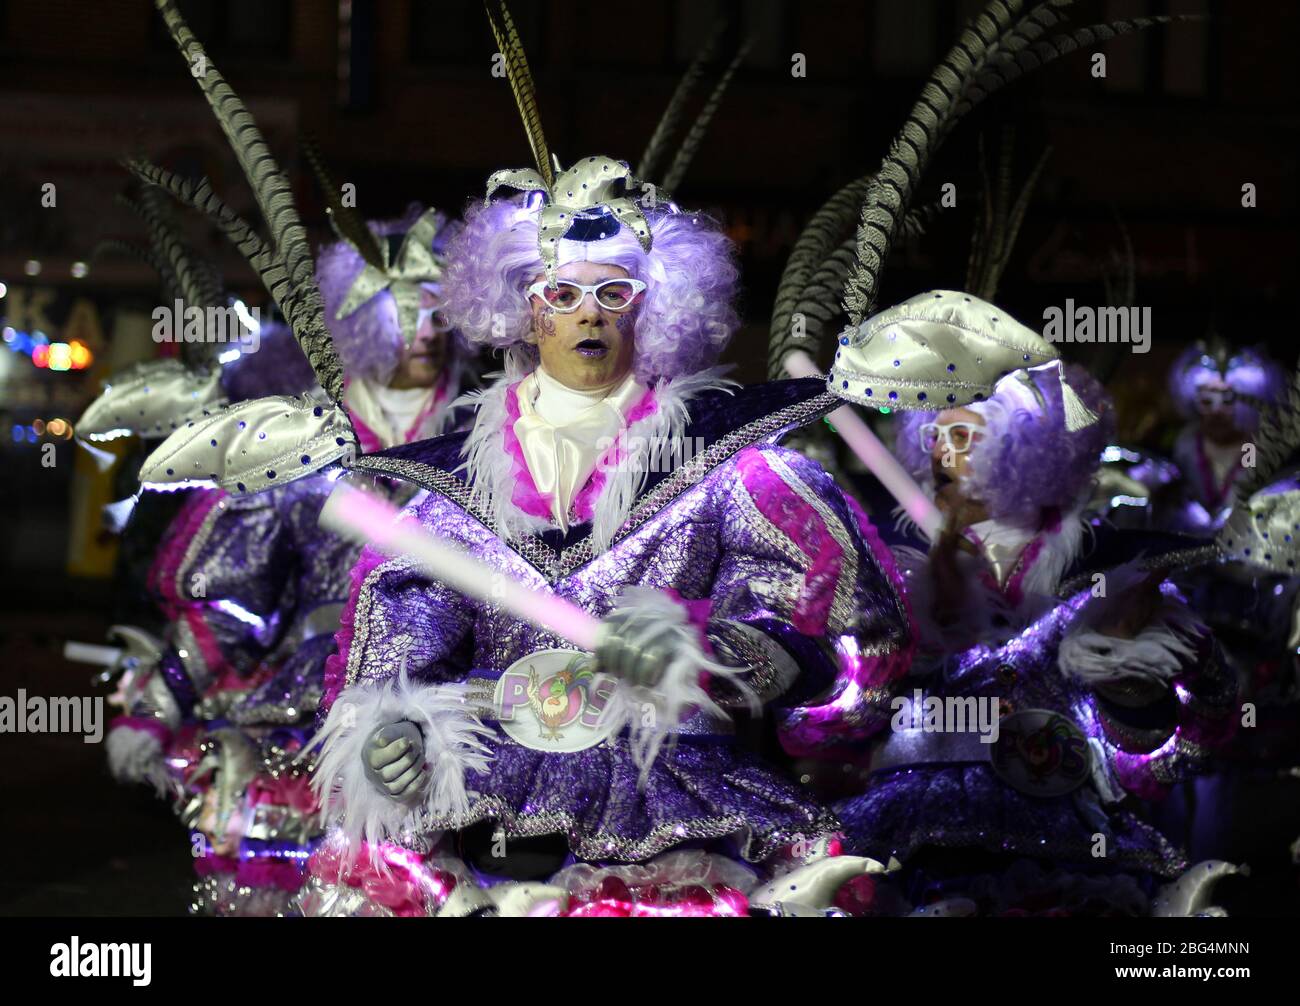 Mardi gras parade night hi-res stock photography and images - Alamy